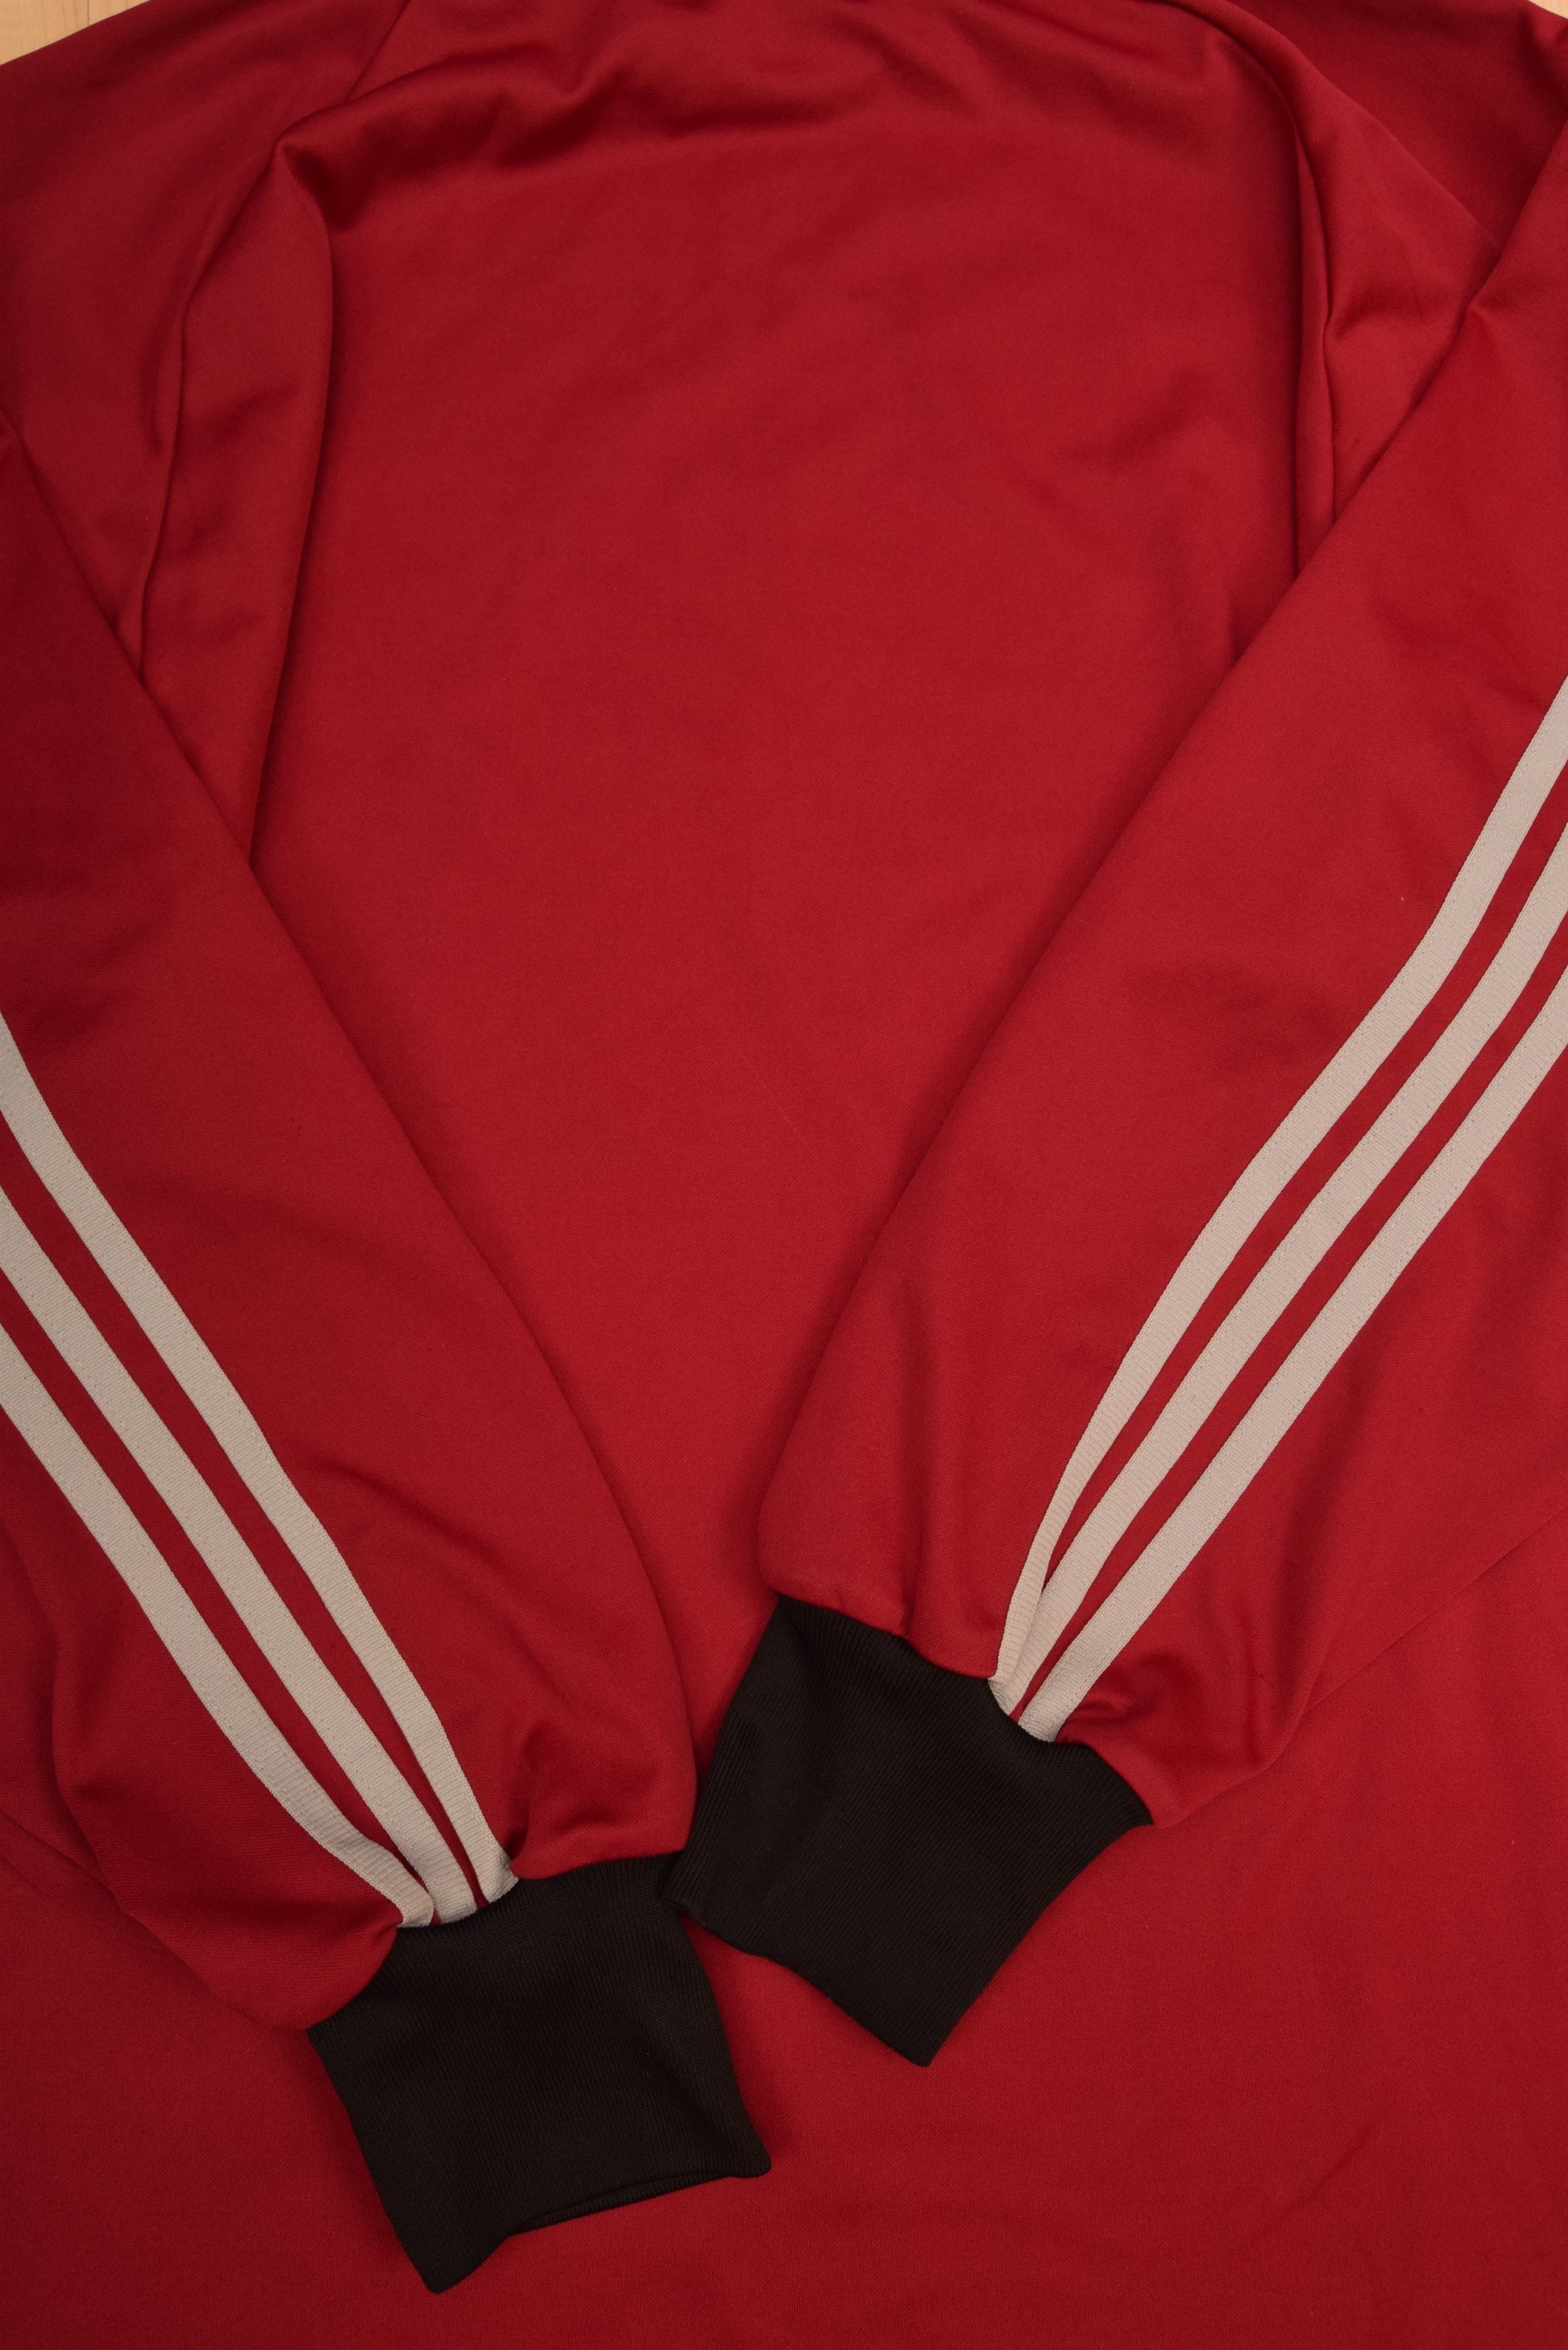 90's Adidas Etrusco Goalkeeper Football Shirt Template 1990 - 2000 Made in England Size XL Burgundy Black Grey Long Sleeve